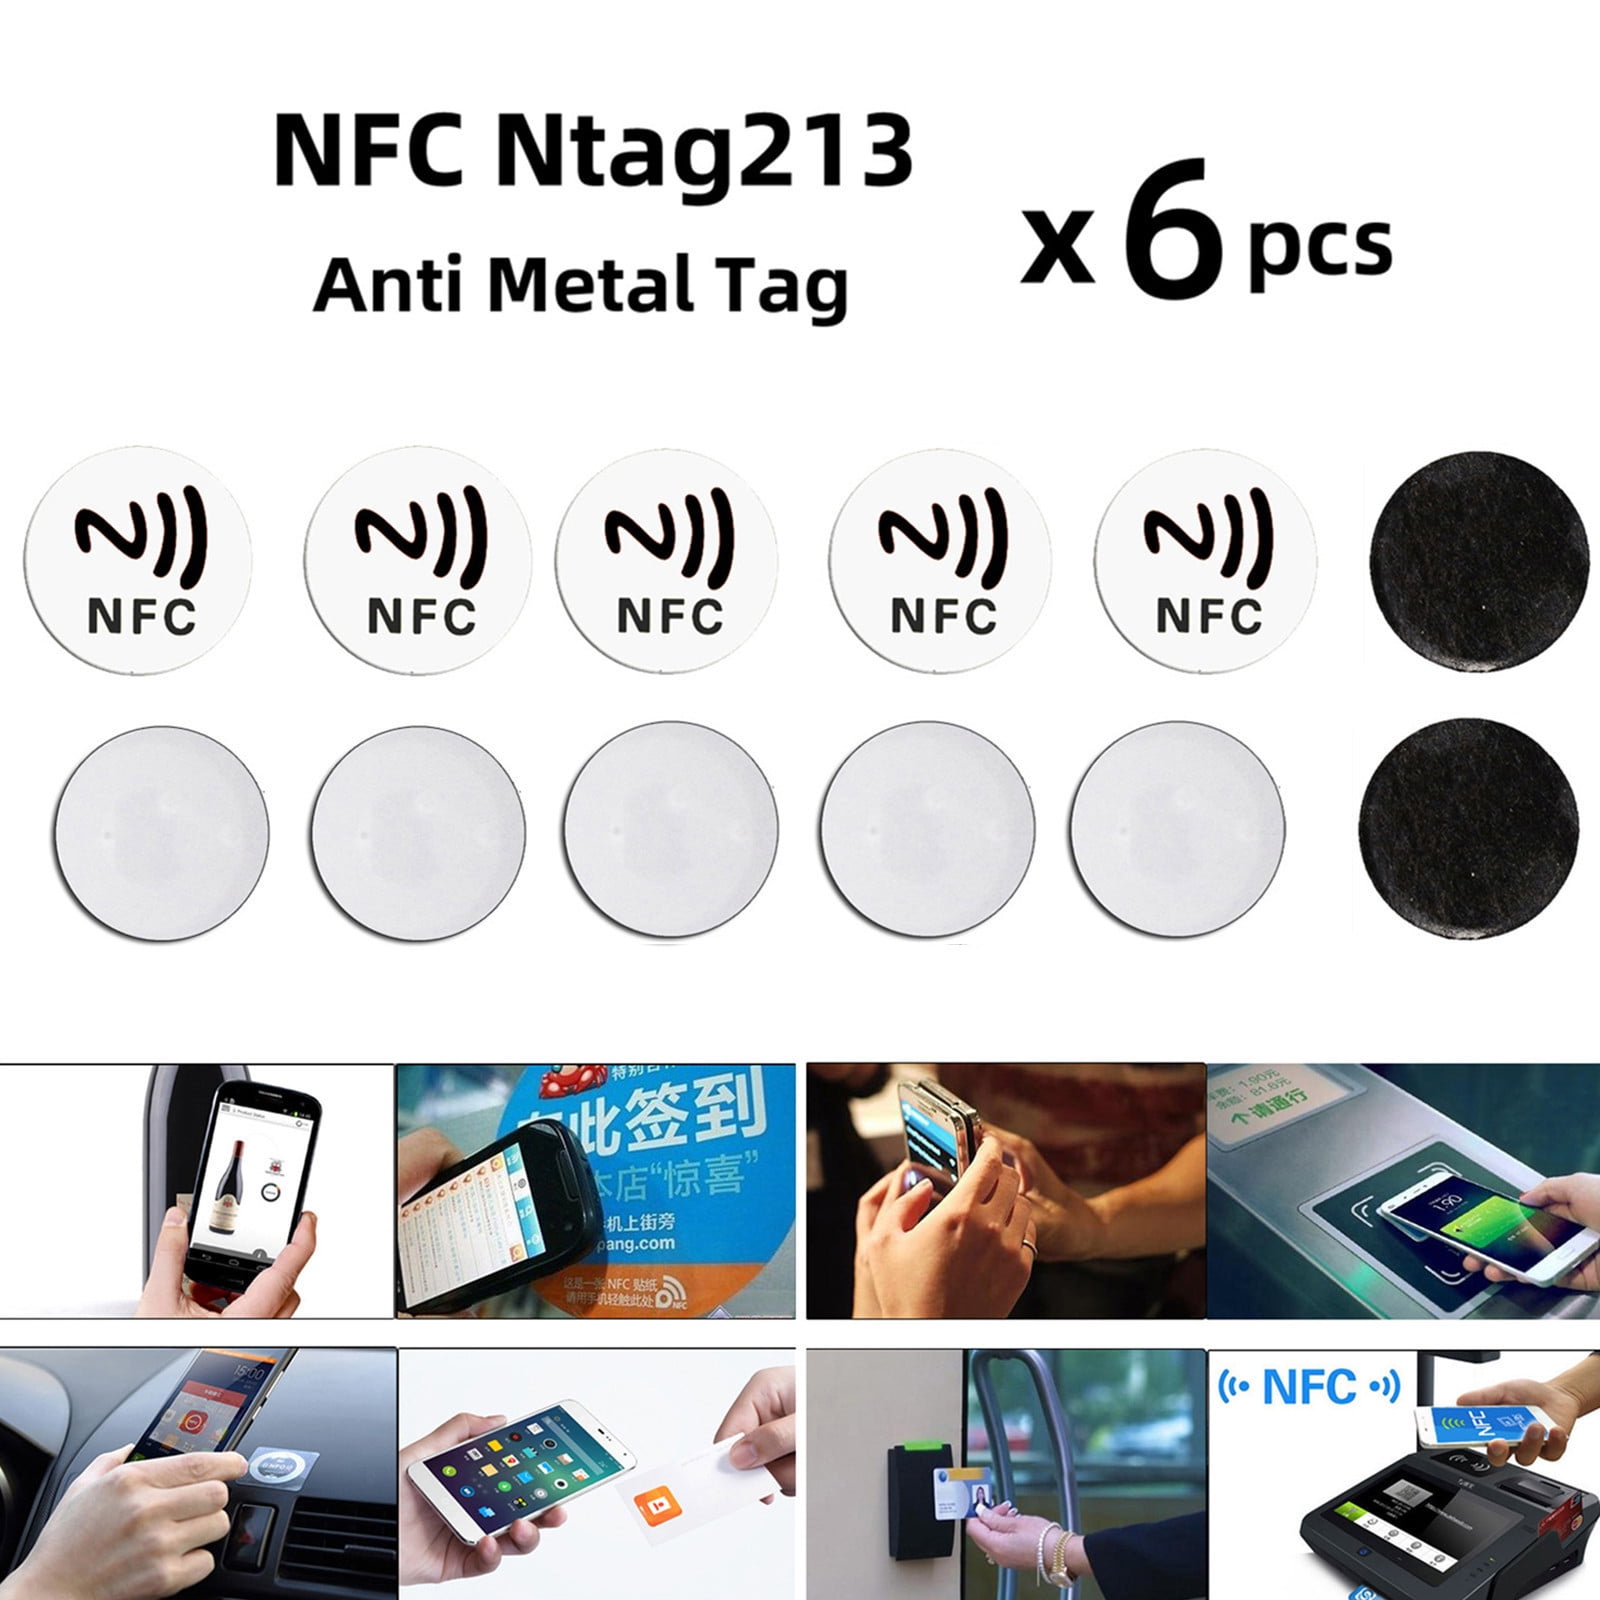 Industrial IP68 NFC Tags NTAG213/6 antimetal 34mm